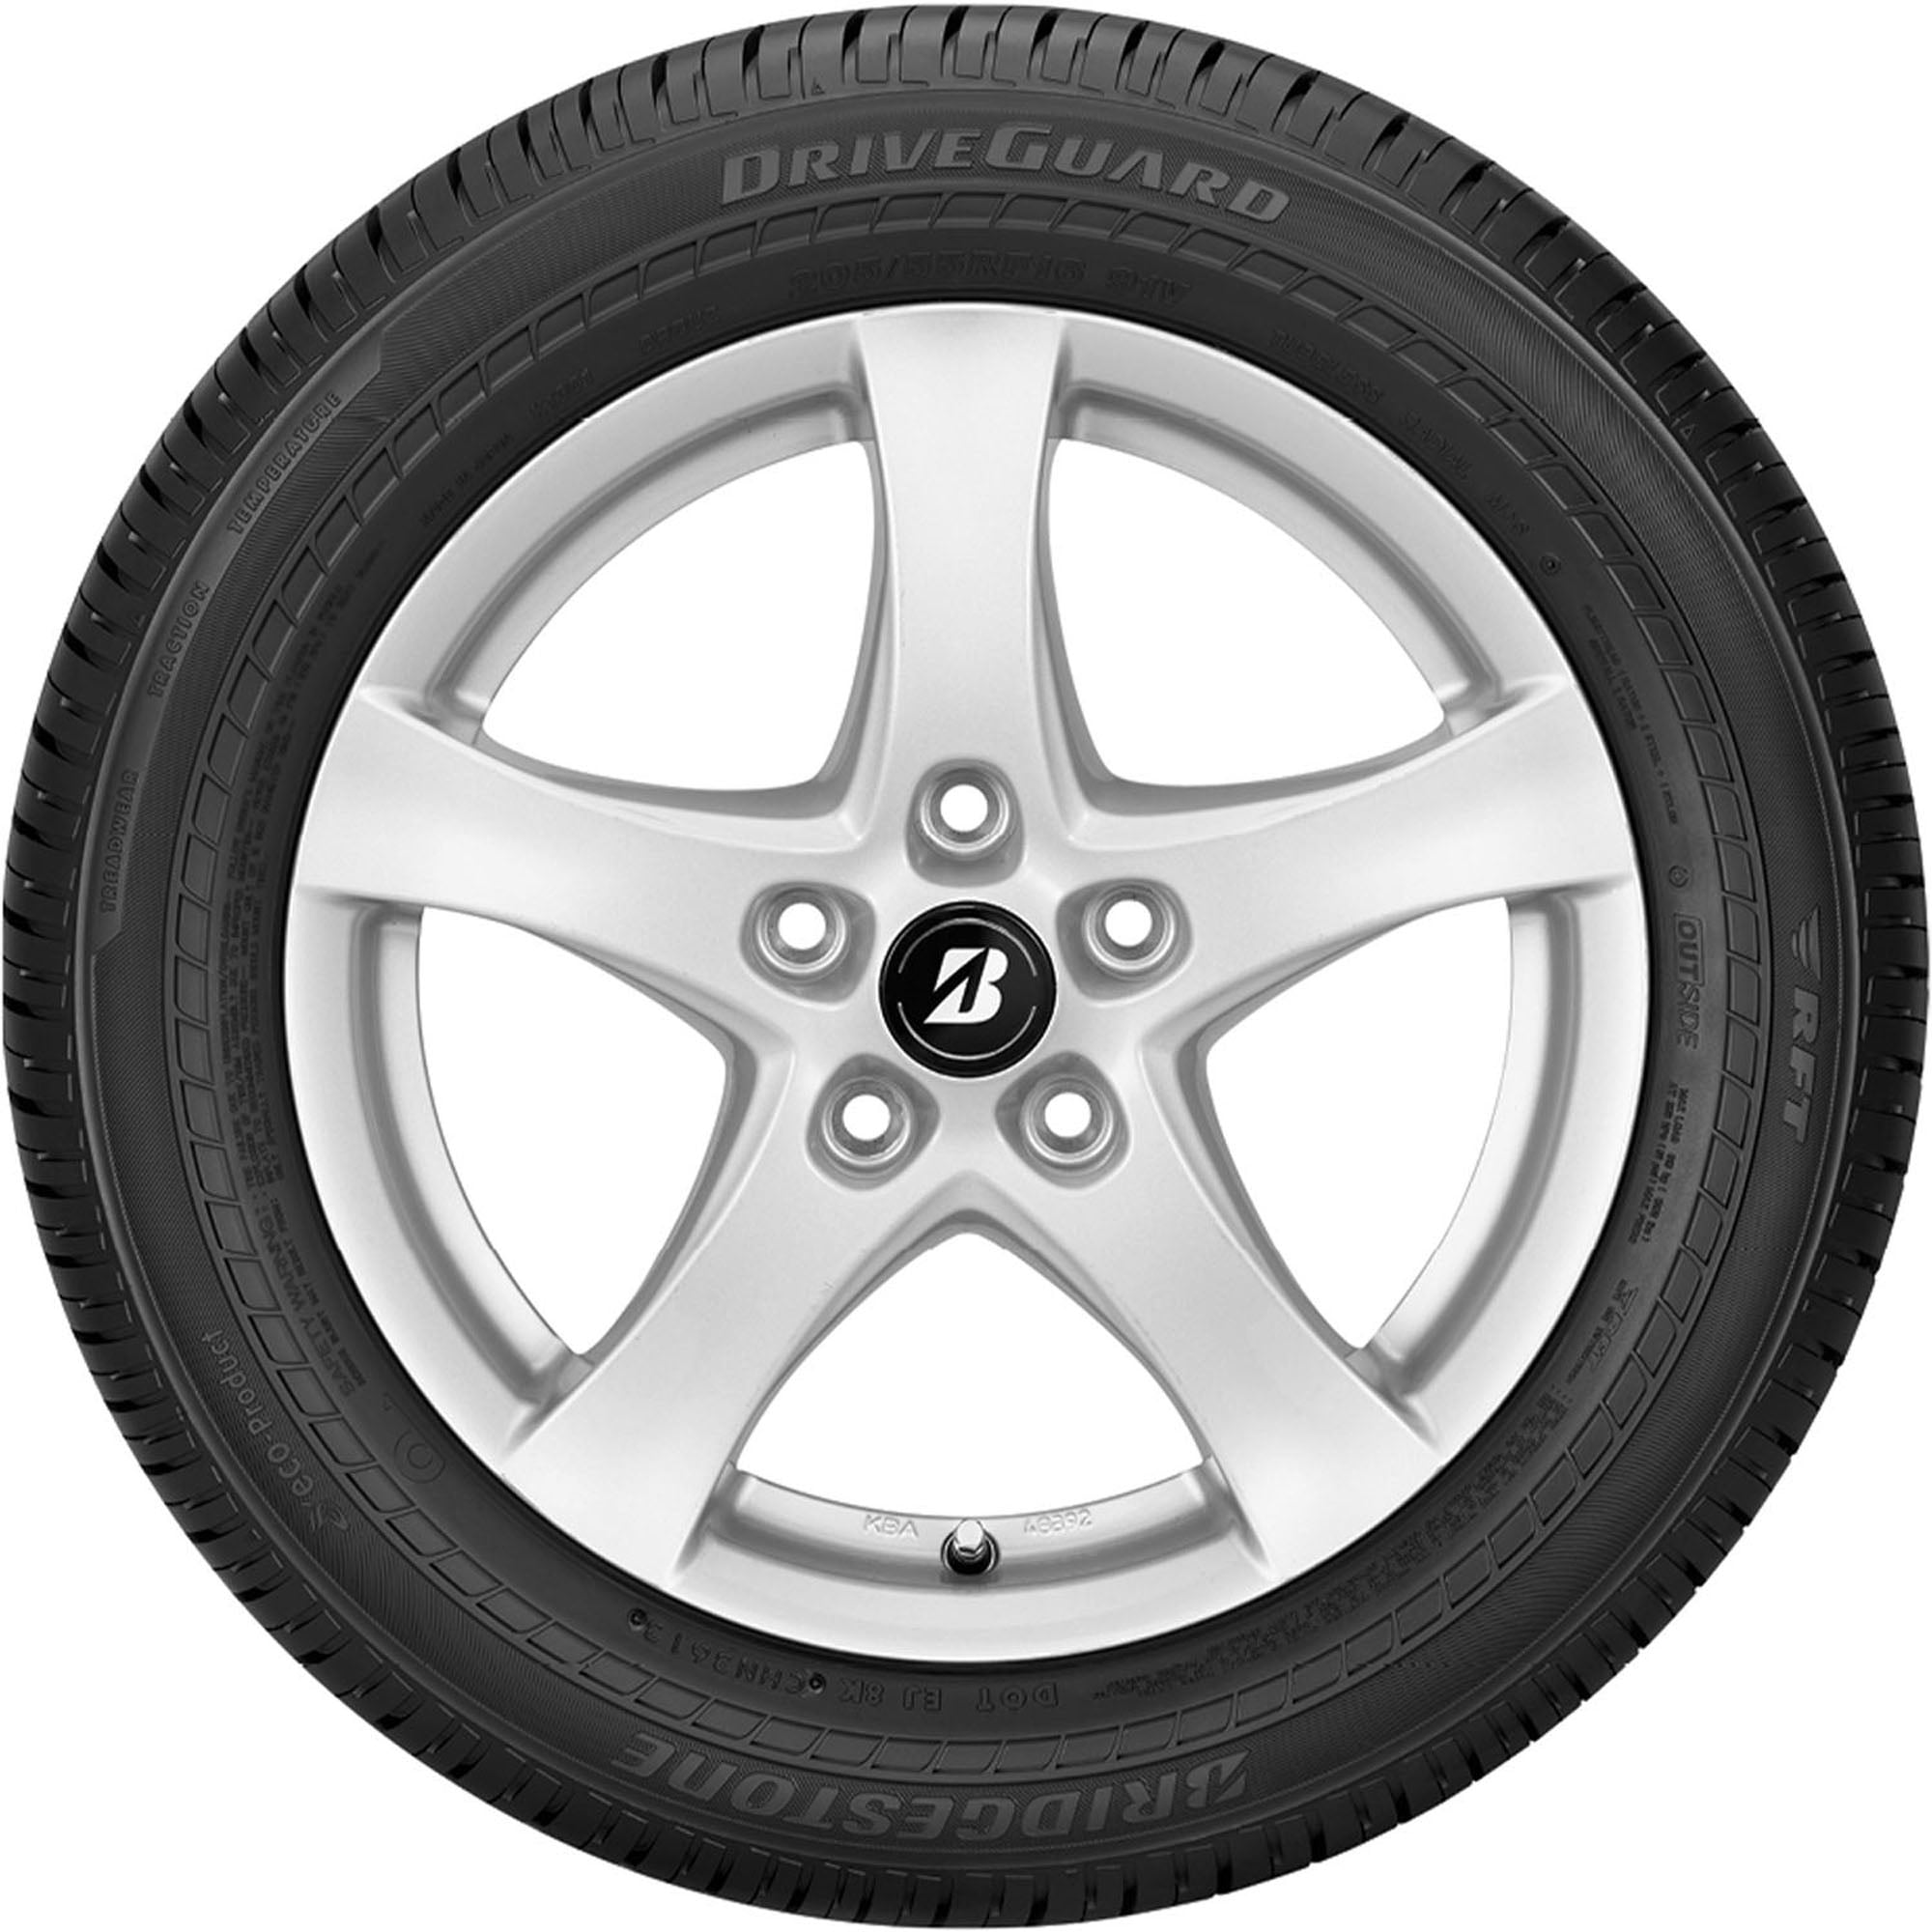 Bridgestone DriveGuard All Season 215/55R17 94V Passenger Tire Fits:  2011-15 Chevrolet Cruze Eco, 2012-14 Toyota Camry Hybrid XLE